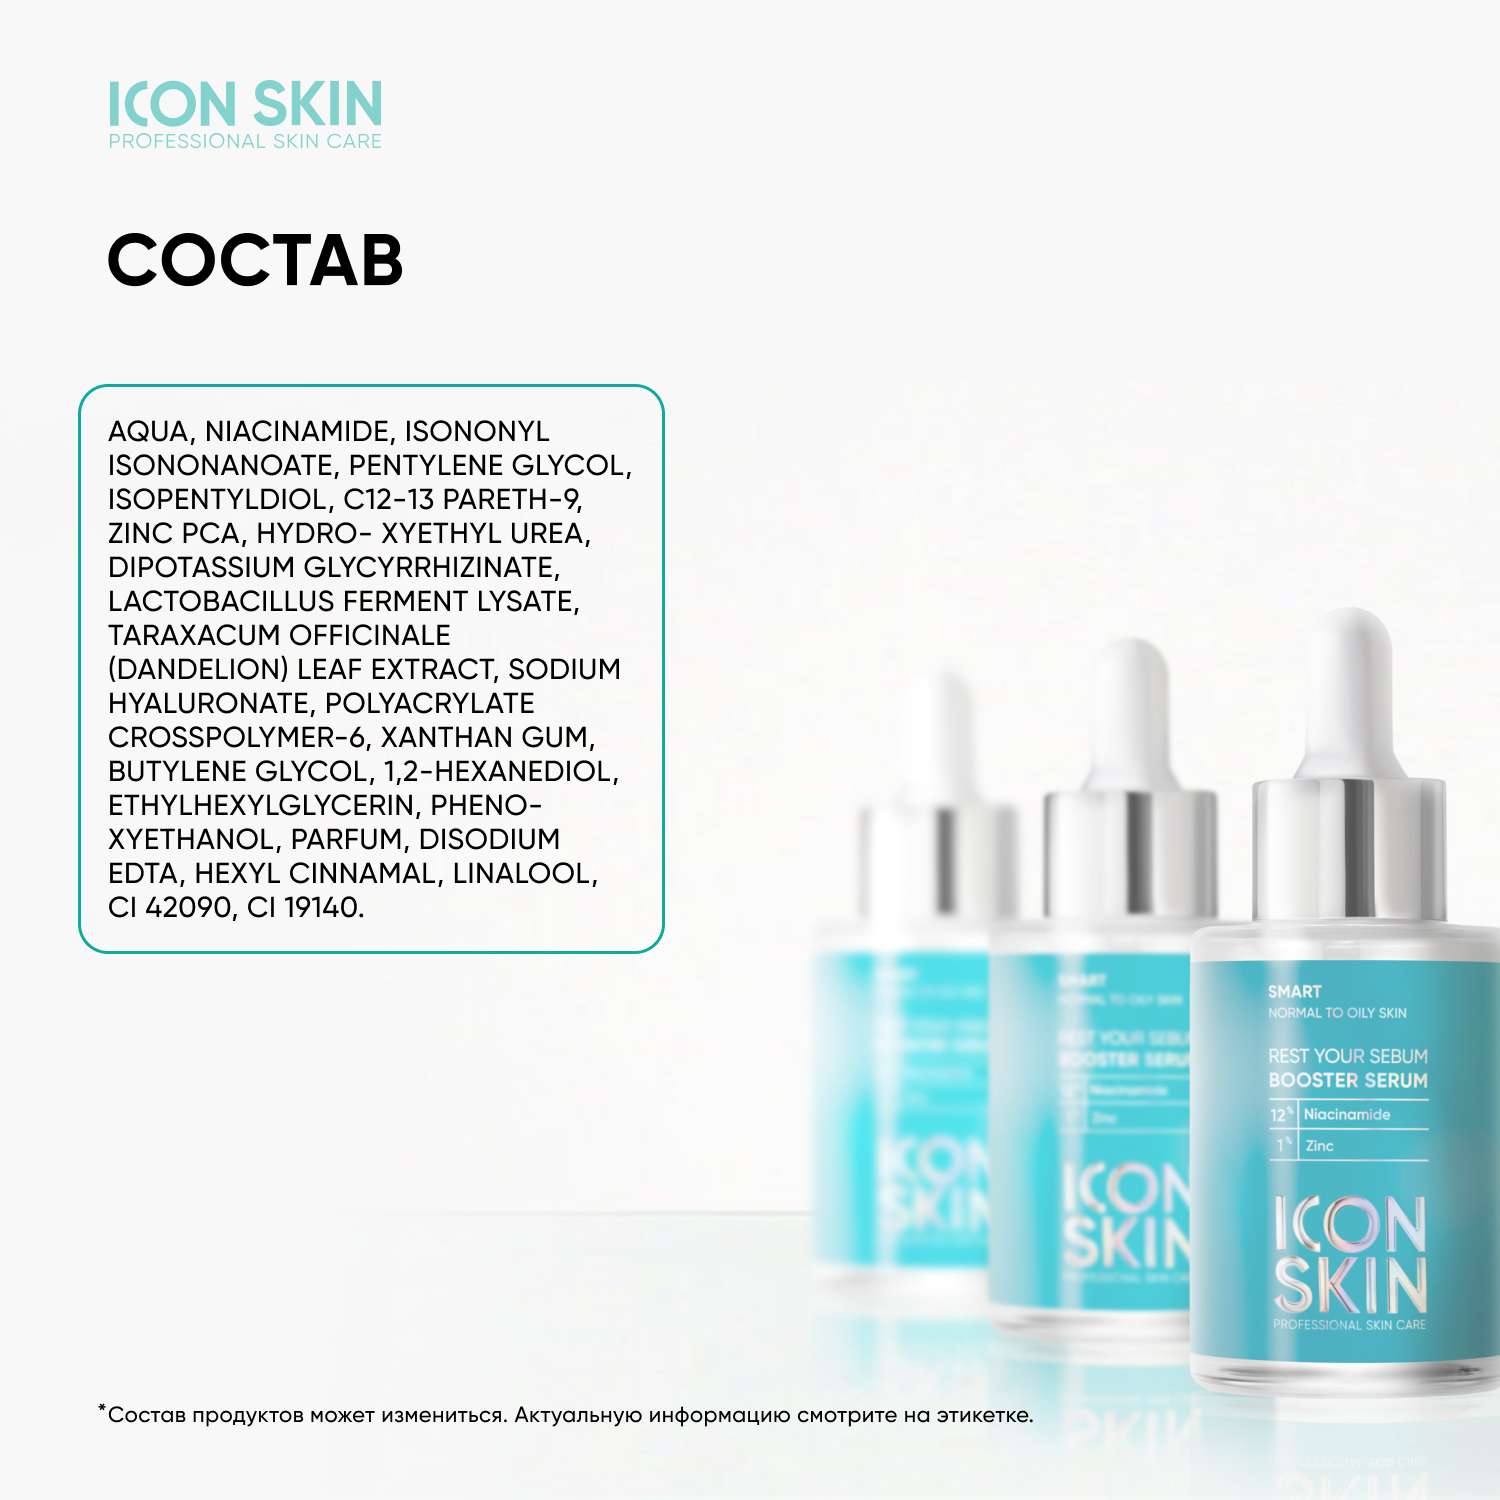 Себорегулирующая сыворотка ICON SKIN Rest Your Sebum с ниацинамидом - фото 7